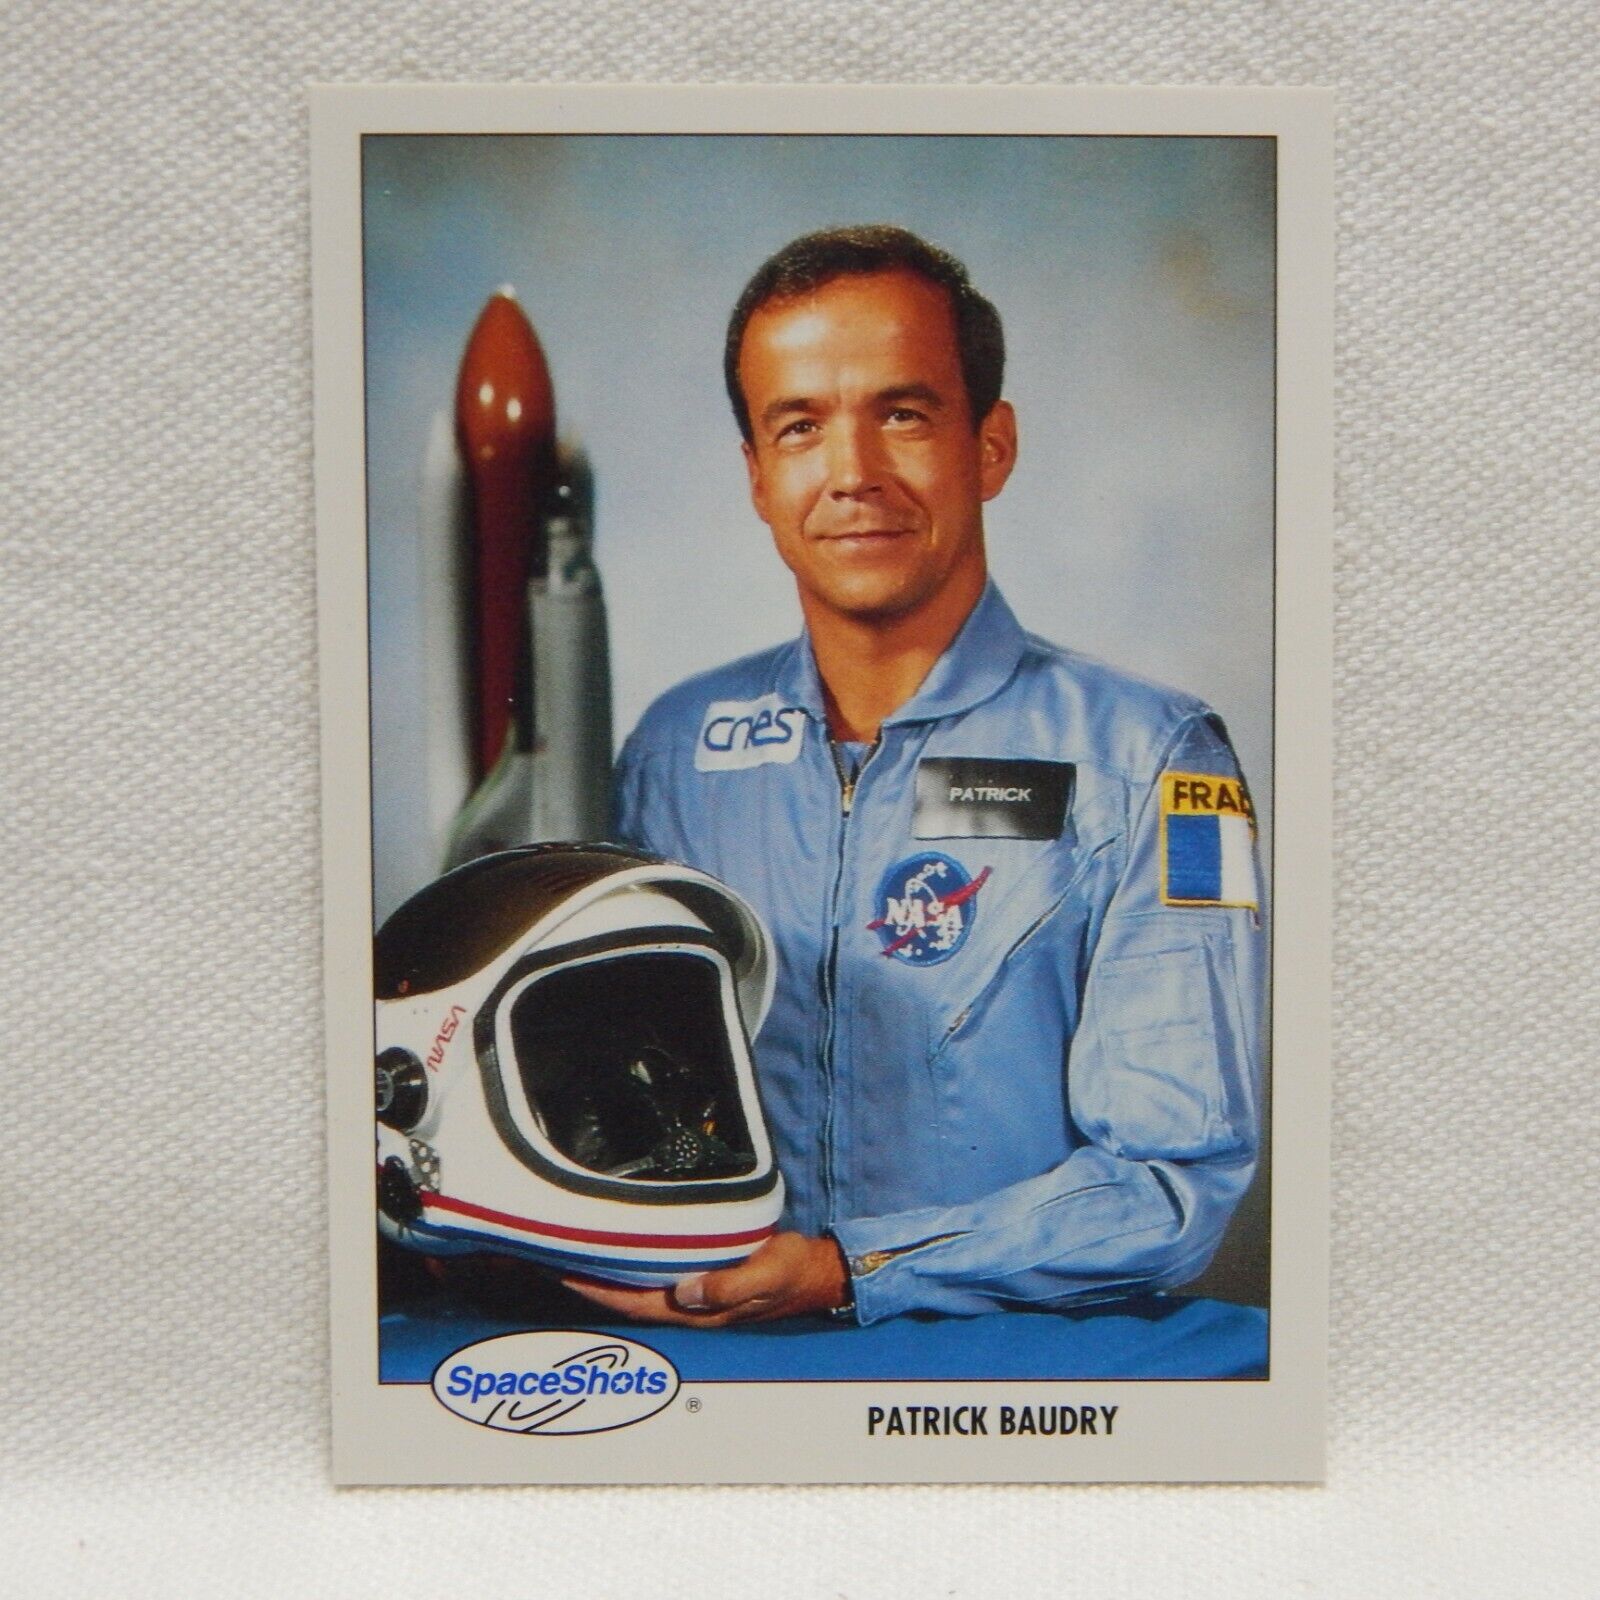 SPACESHOTS TRADING CARD 1992, PATRICK BAUDRY